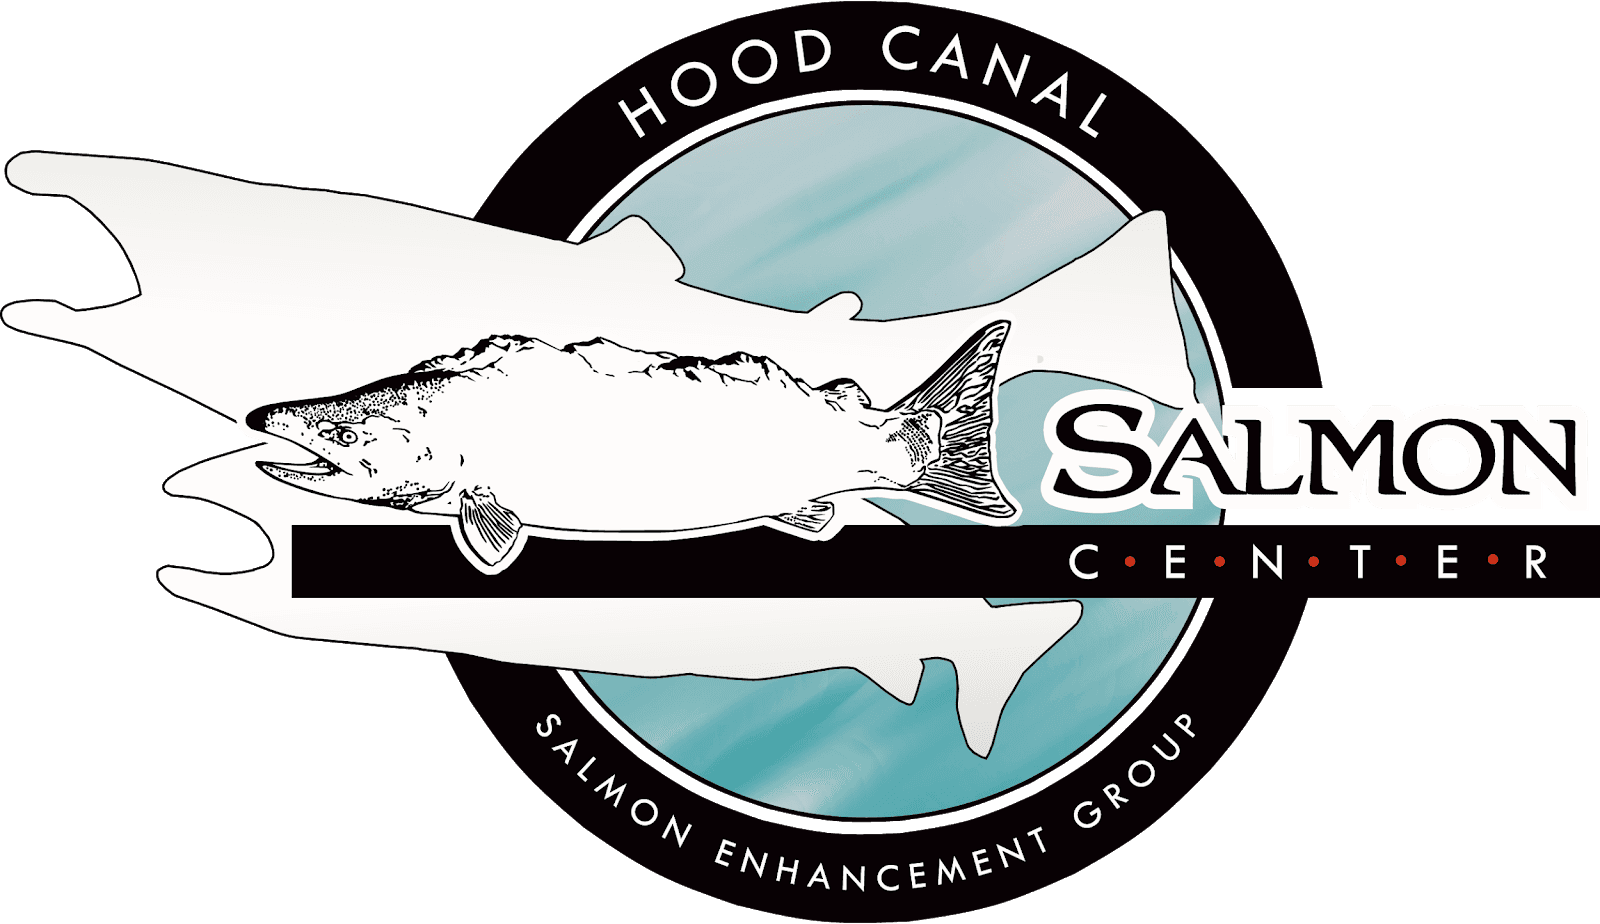 Hood Canal Salmon Run 5K